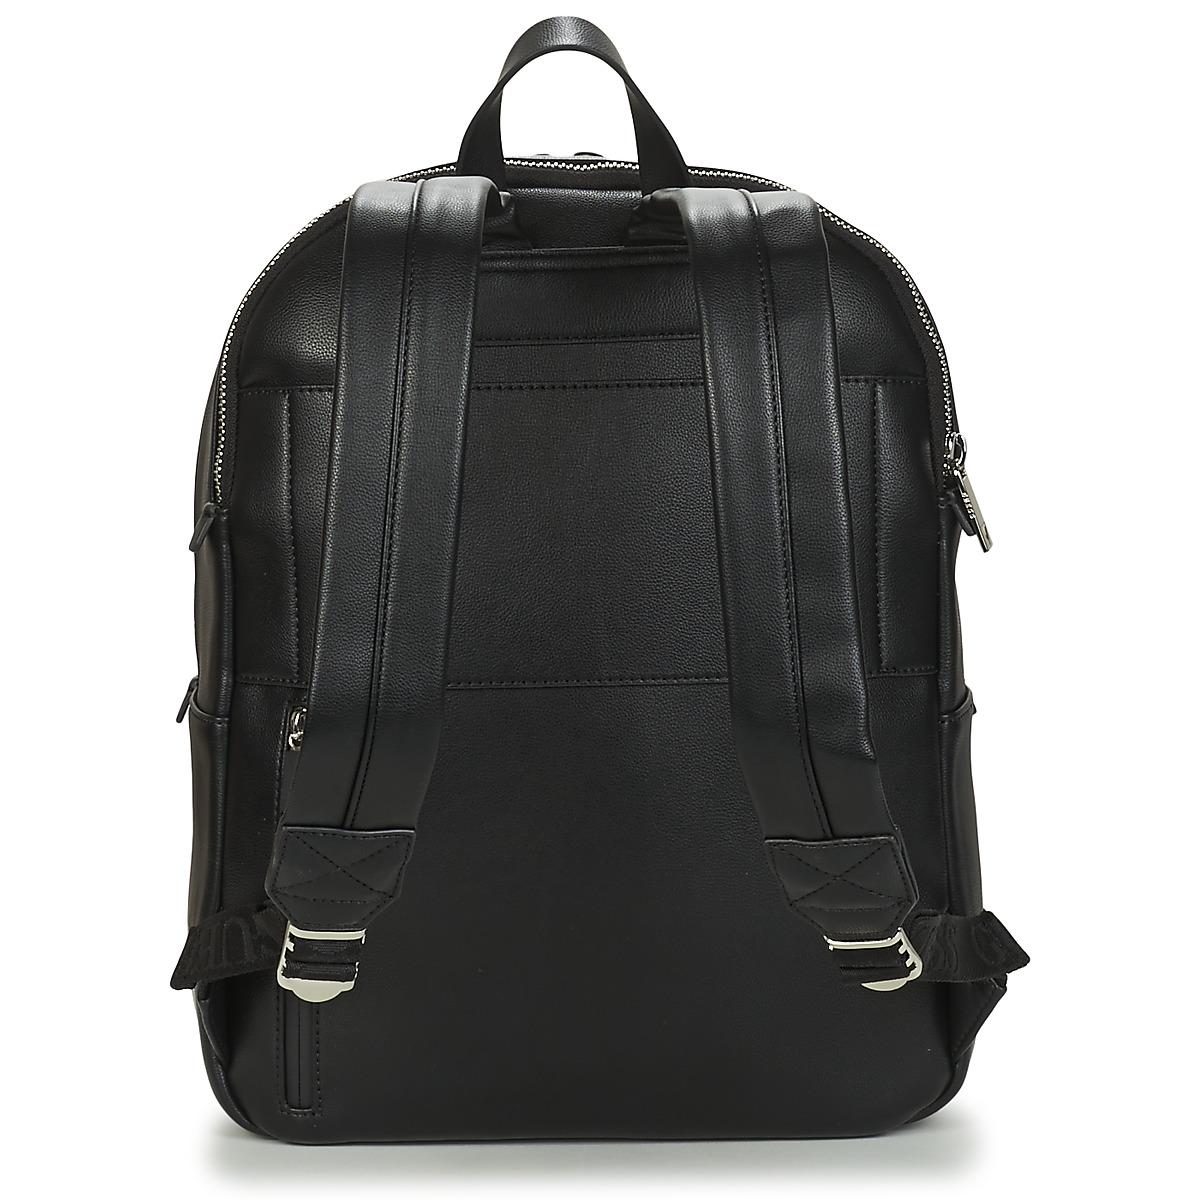 Guess Dan Backpack Backpack in Black for Men - Lyst